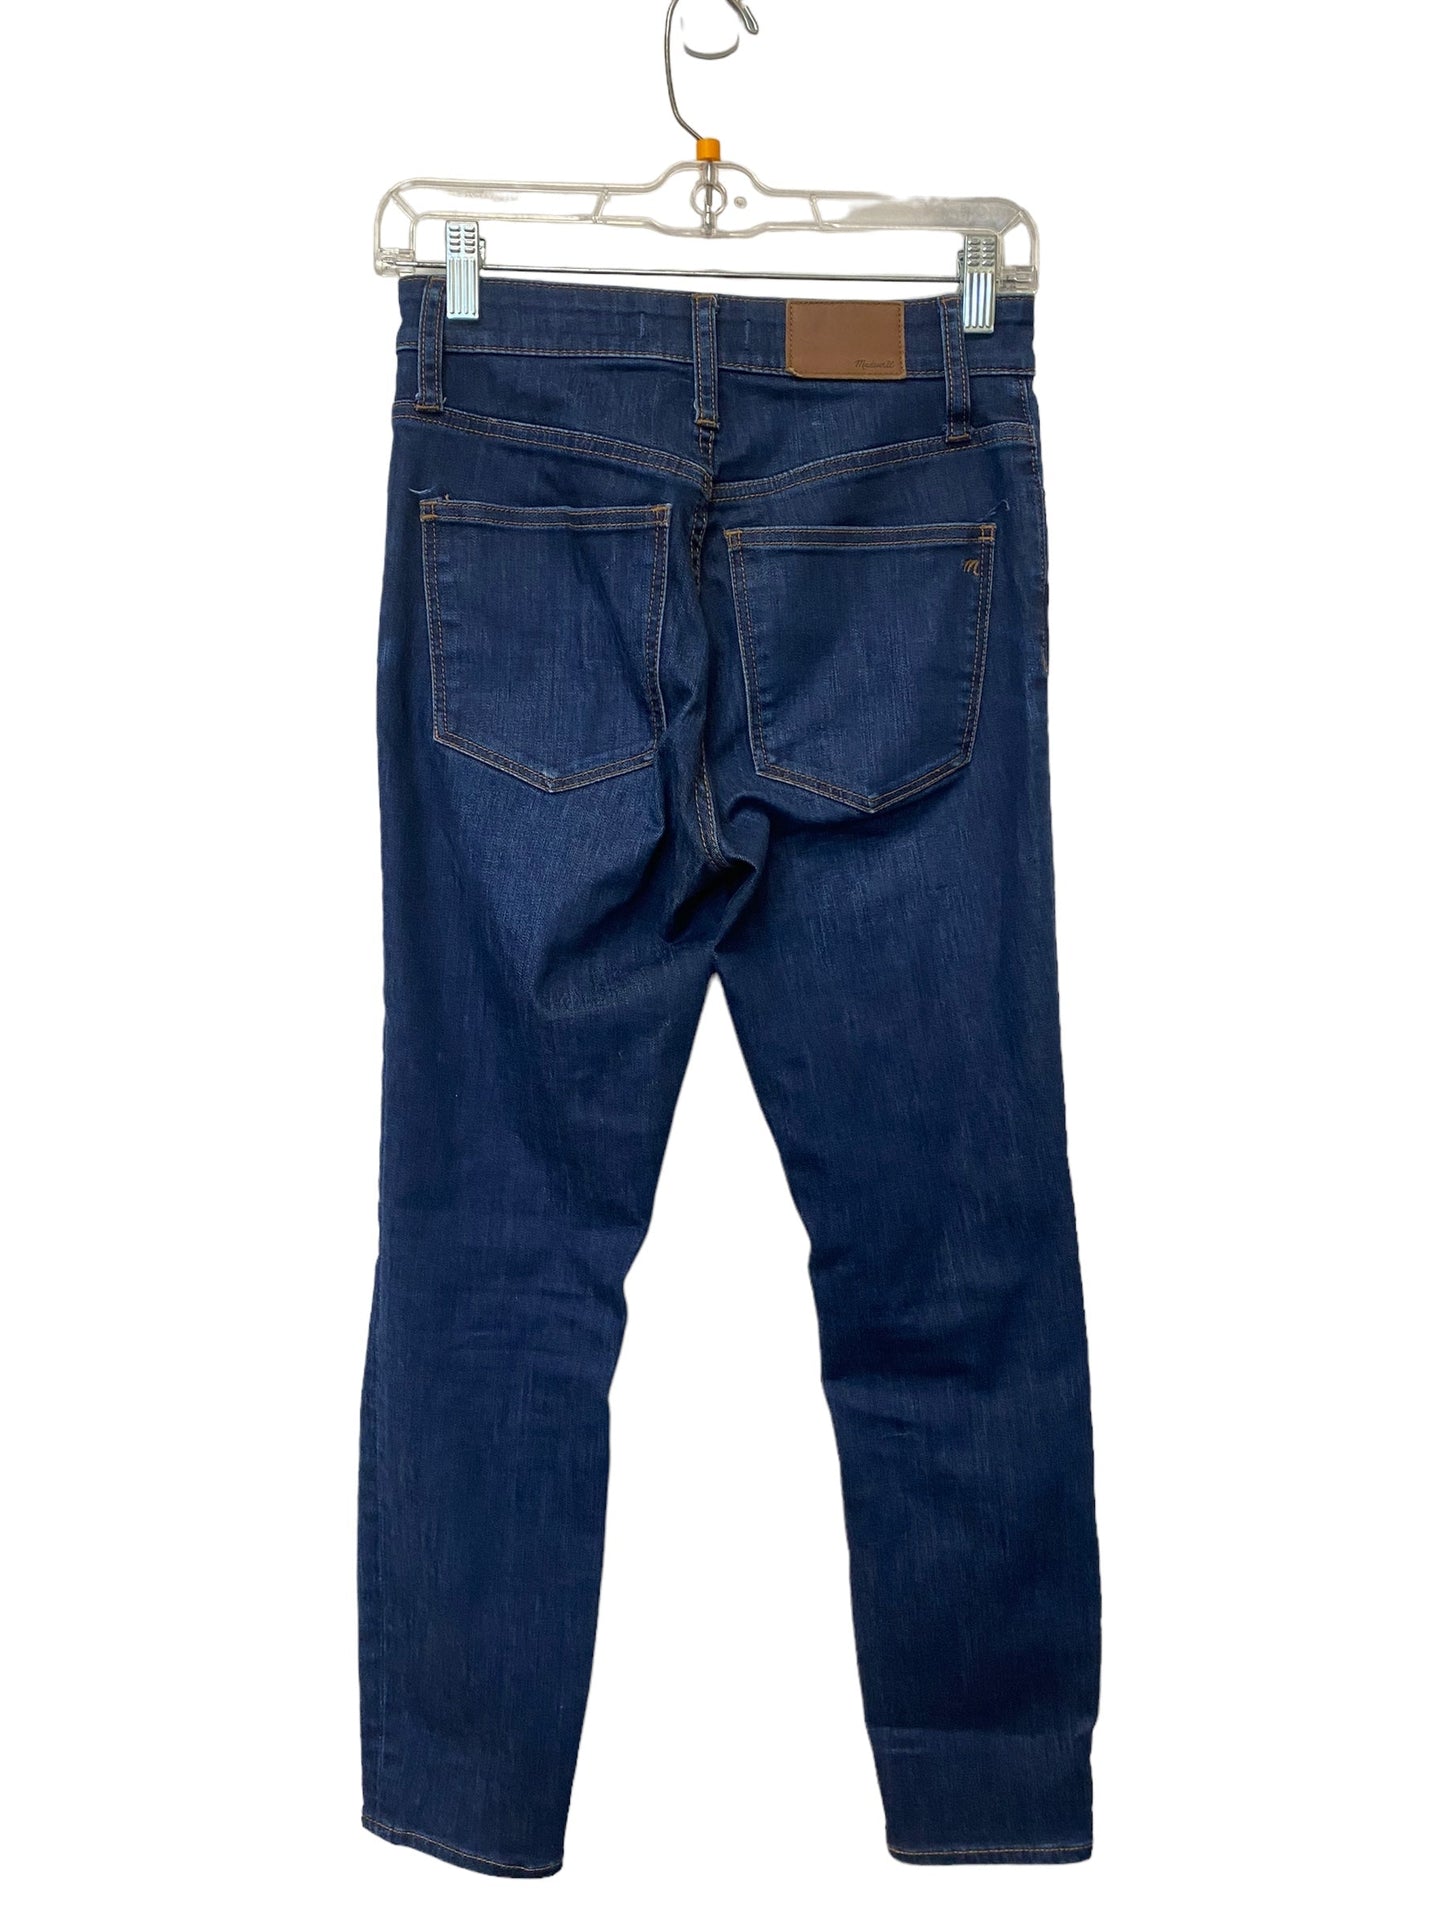 Blue Denim Jeans Skinny Madewell